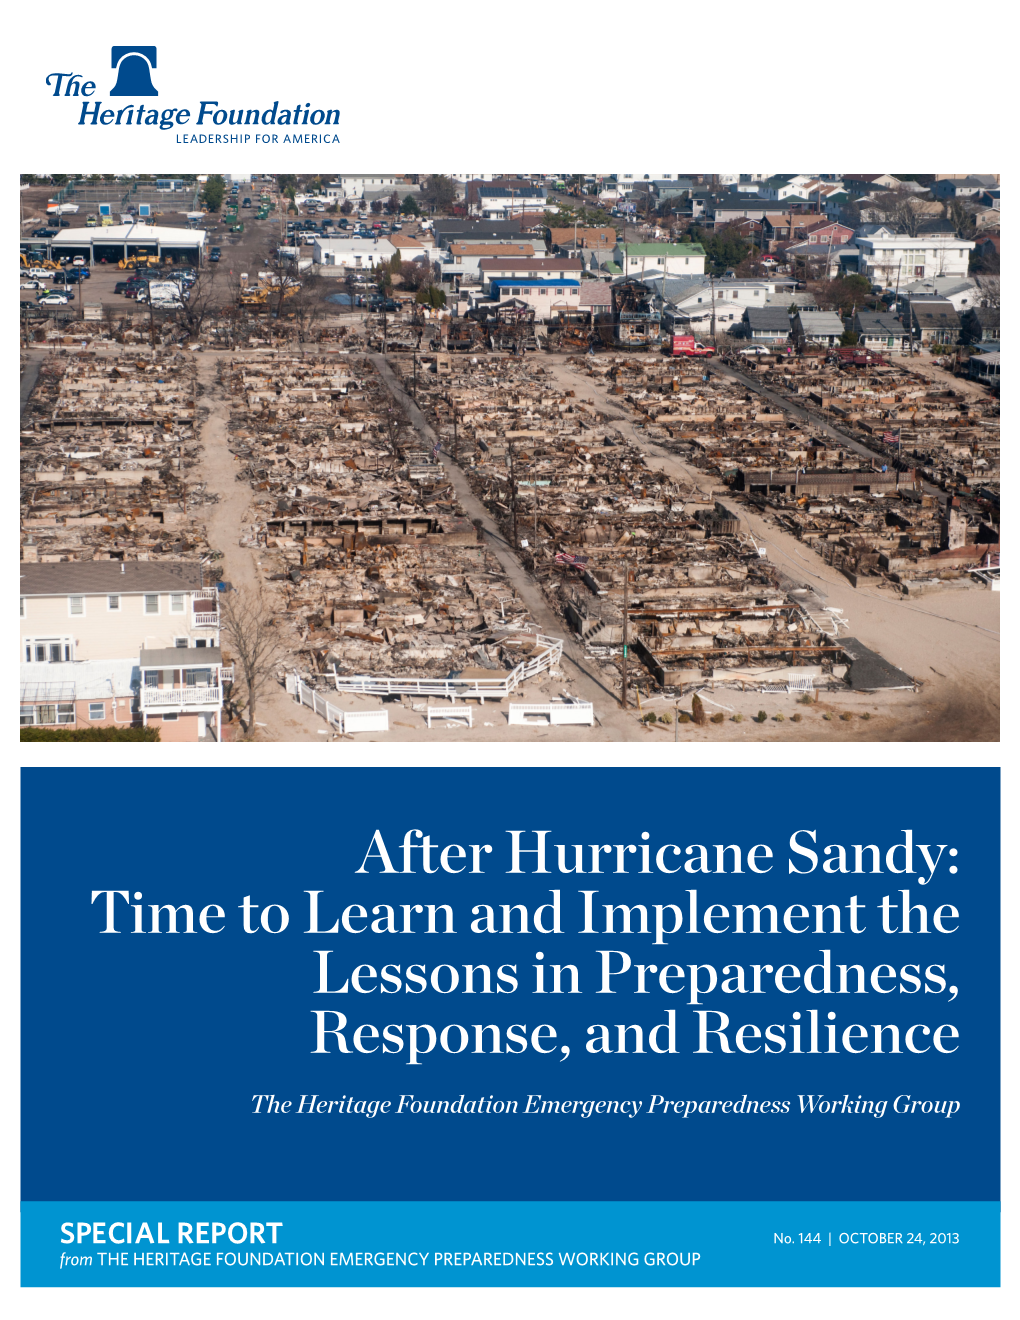 Hurricane Sandy: Lessons in Preparedness, Response And